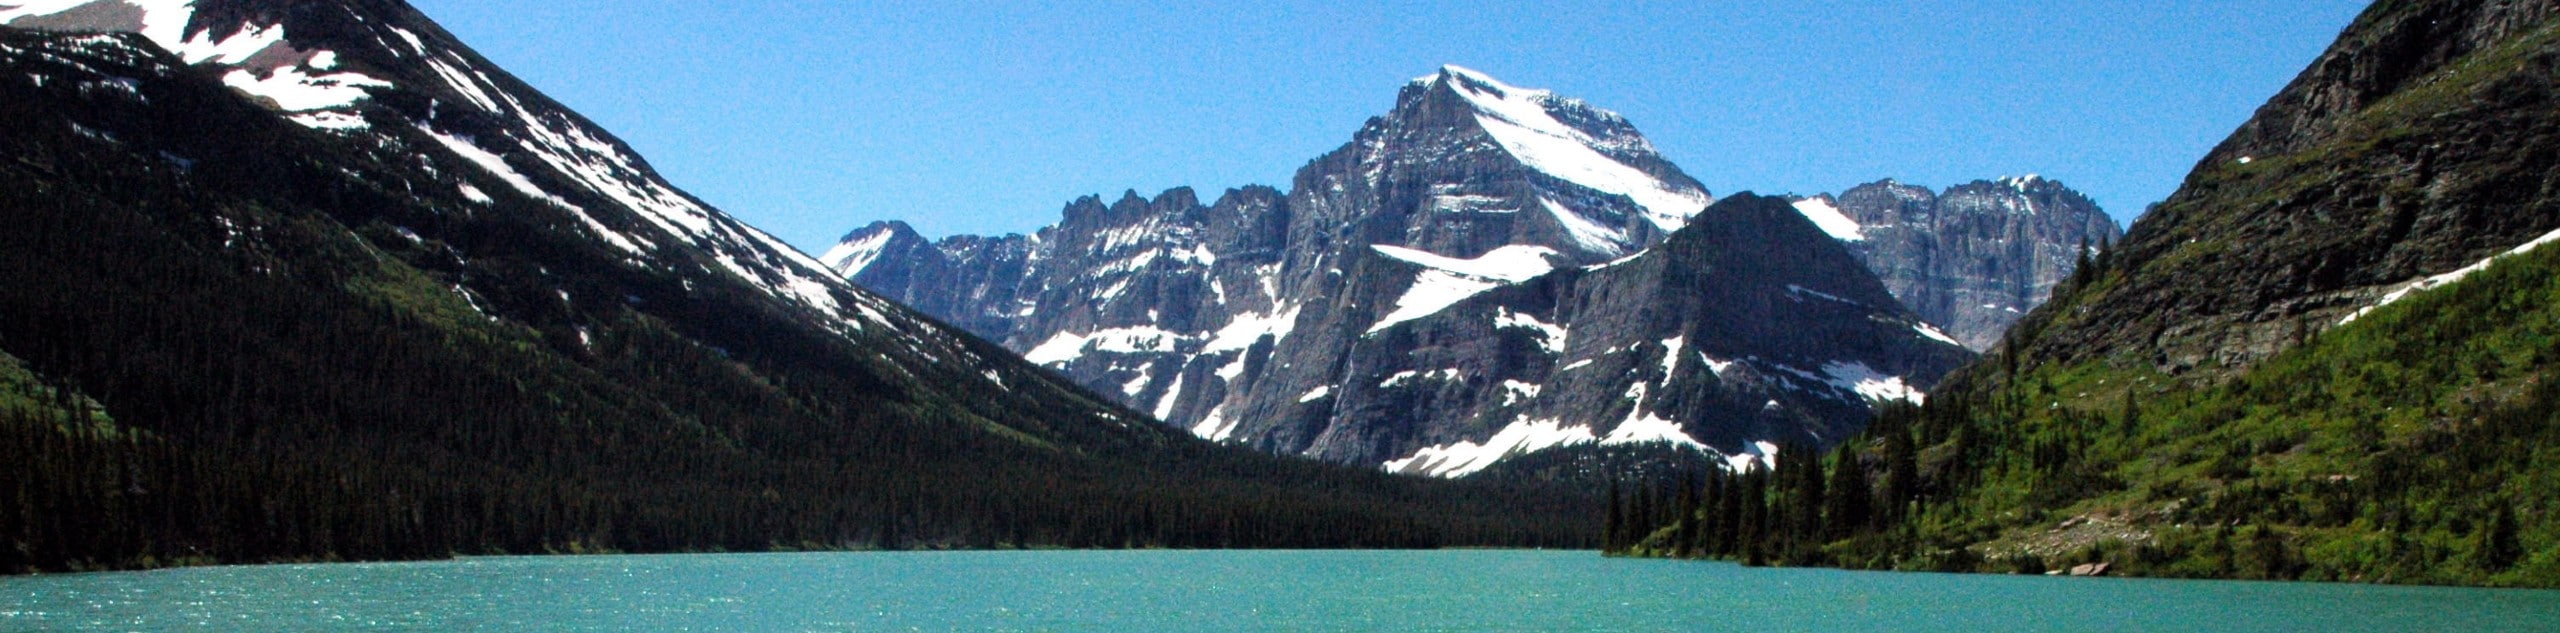 Josephine Lake Trail